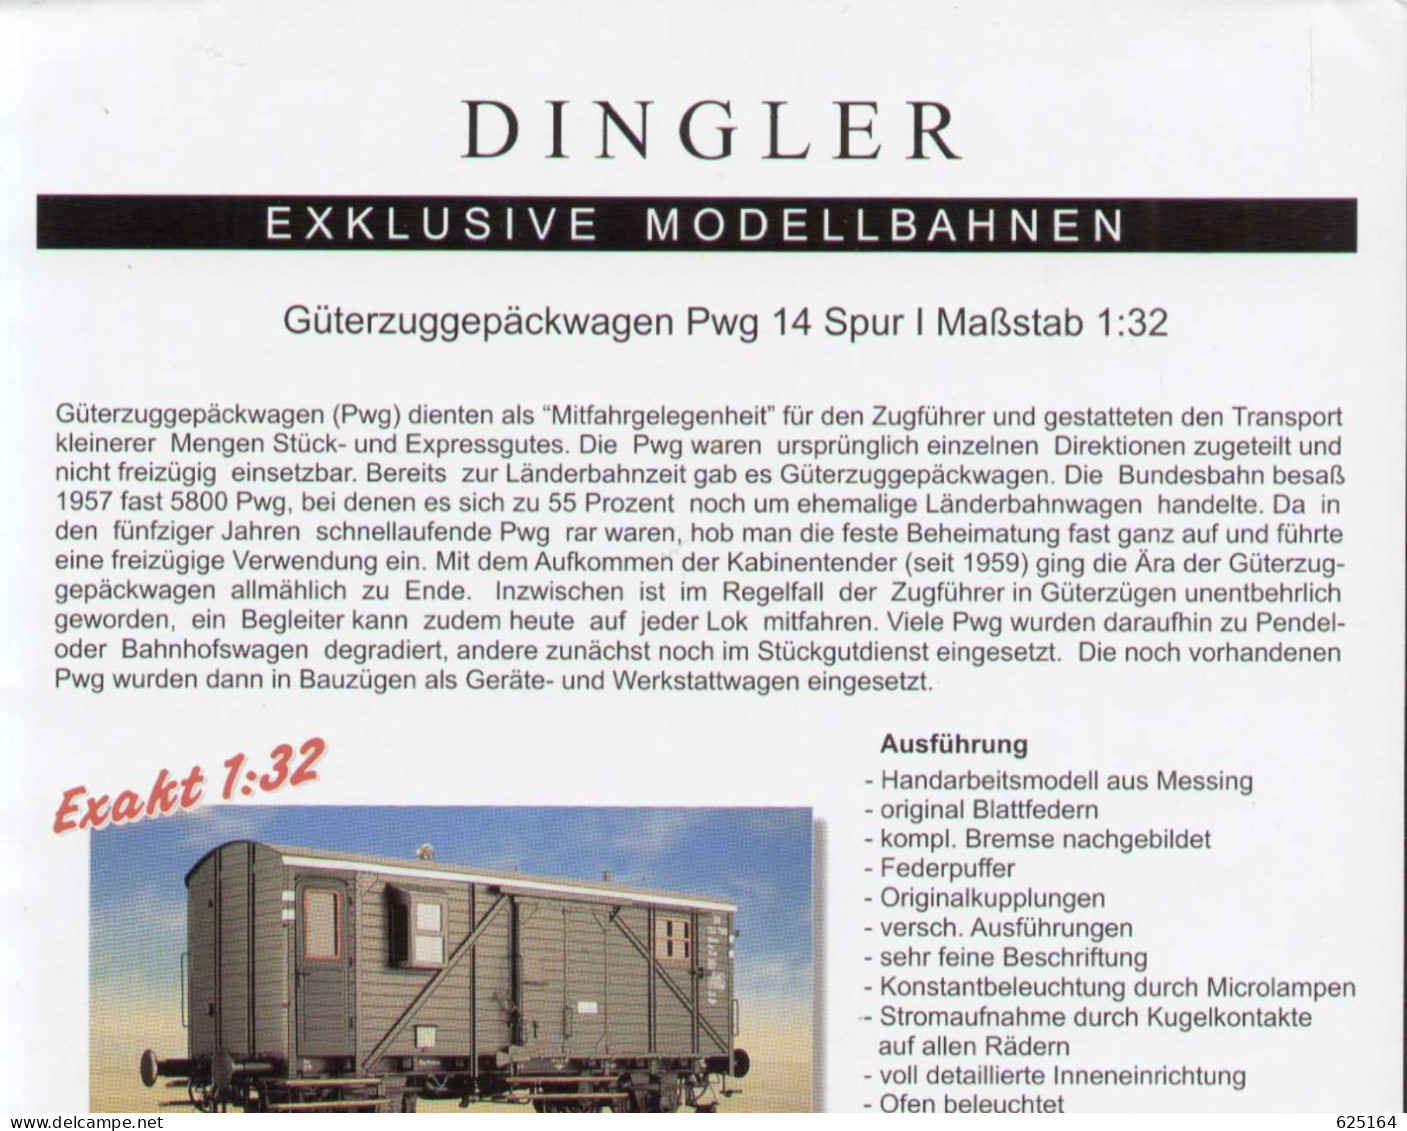 Catalogue DINGLER EXCLUSIVE MODELLBAHNEN 1999 Spur I Informationsblatt - Duits